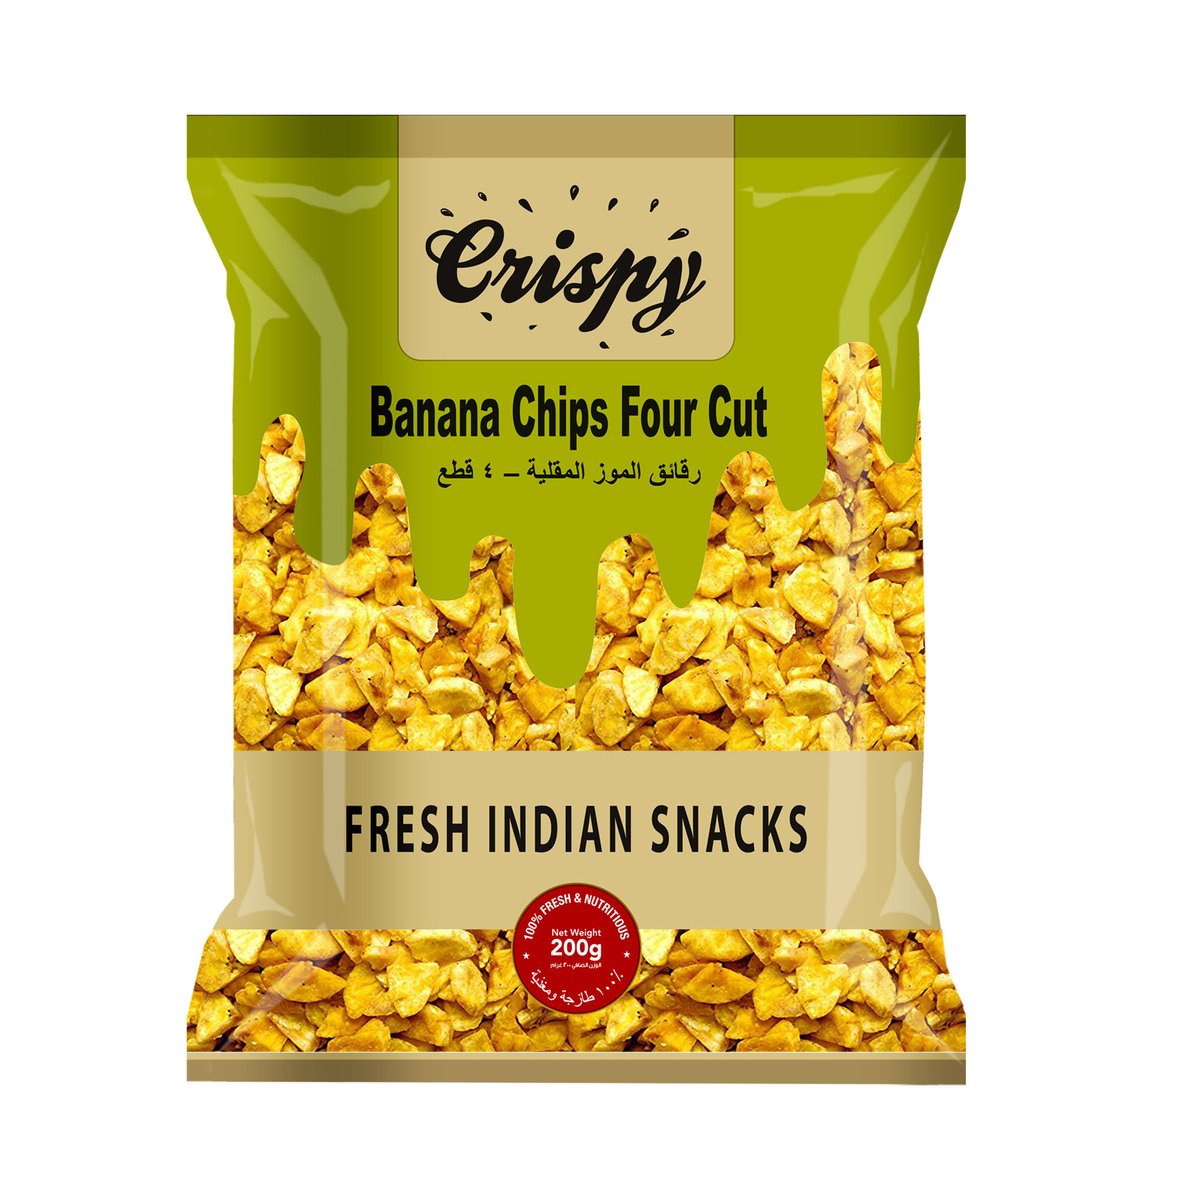 Crispy Four Cut Banana Chips, 200 g